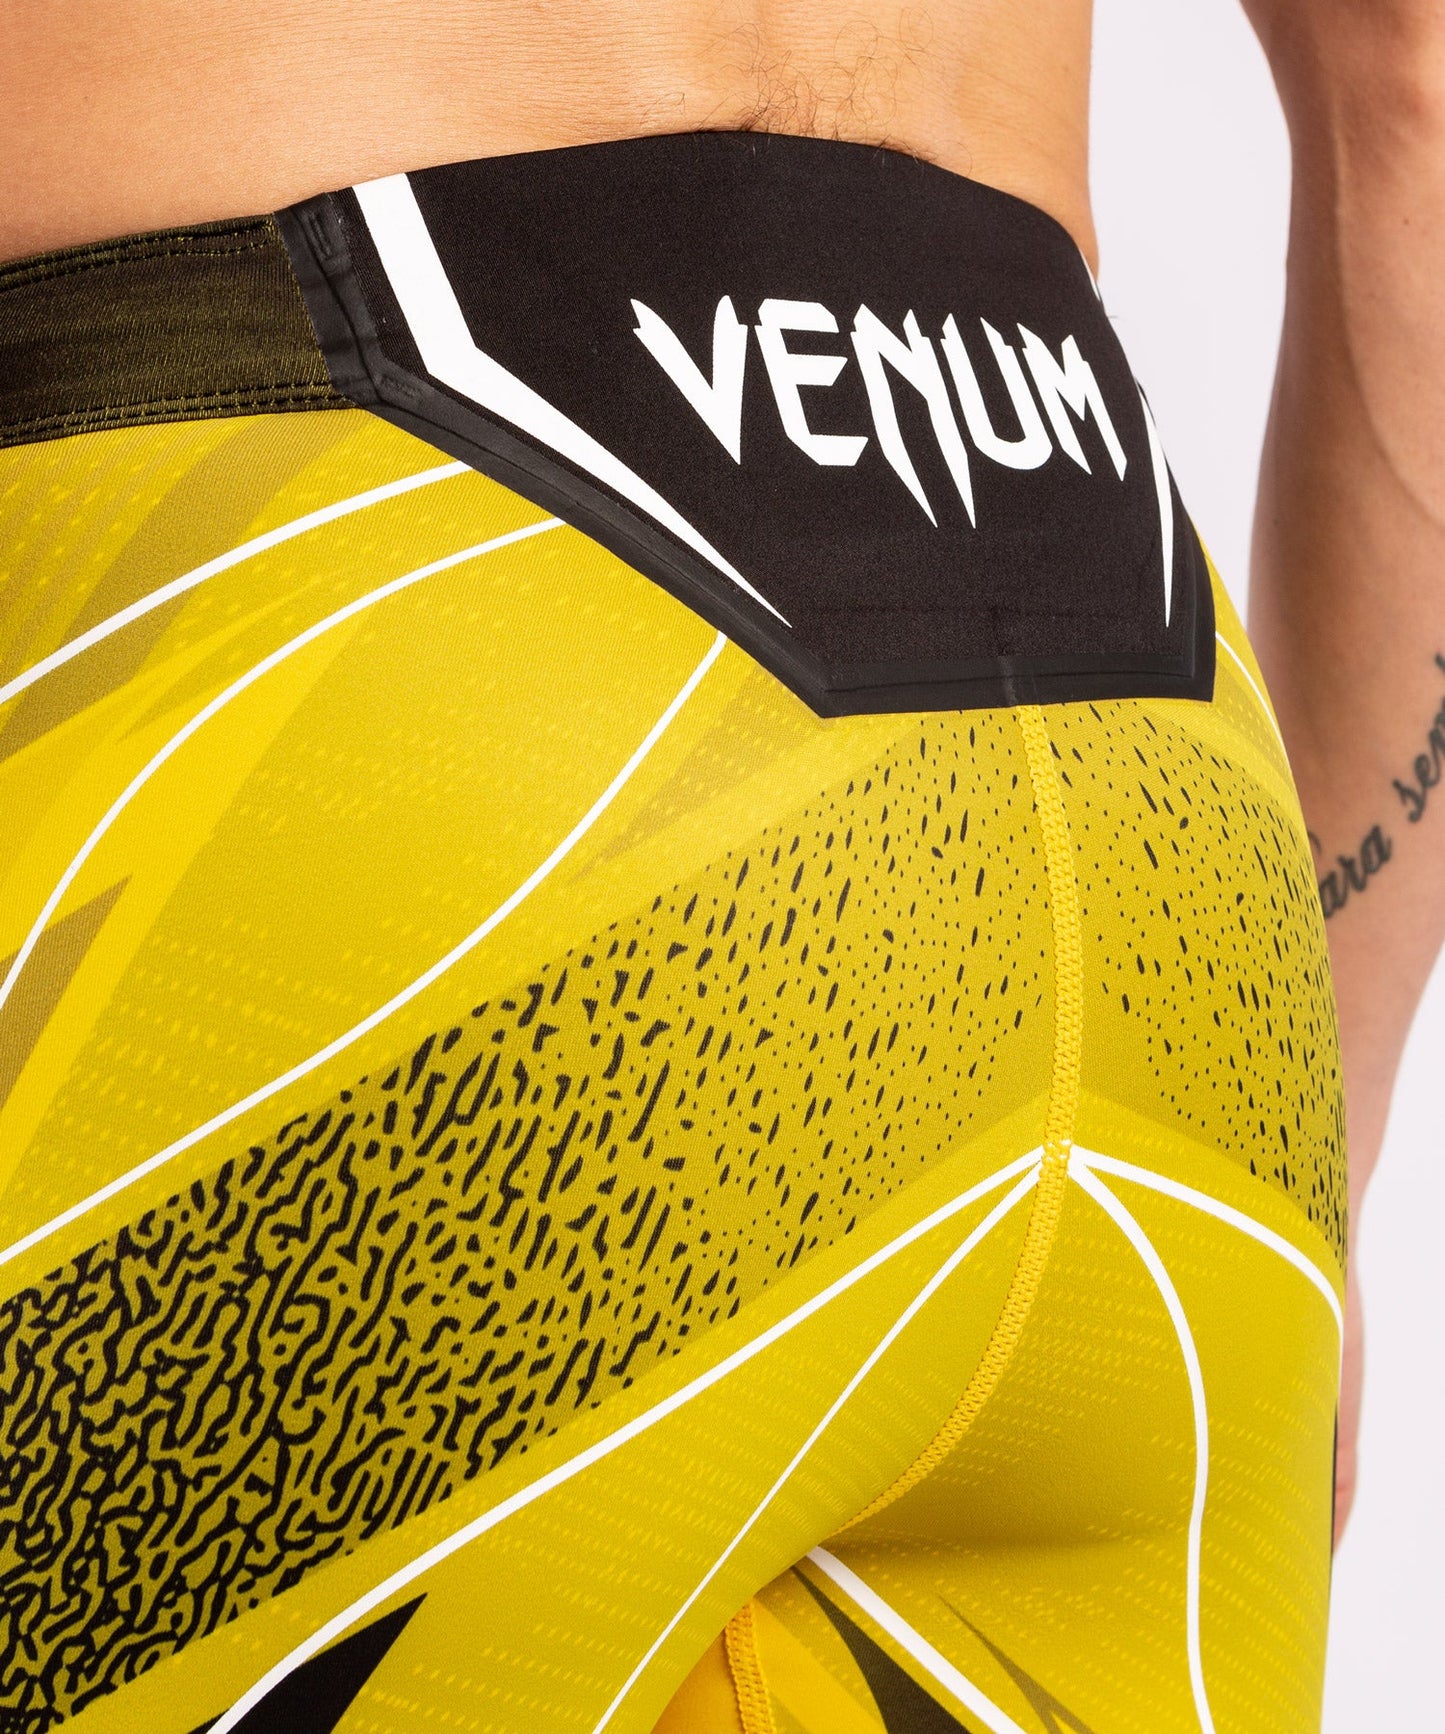 UFC Venum Authentic Fight Night Men's Vale Tudo Shorts - Long Fit - Yellow